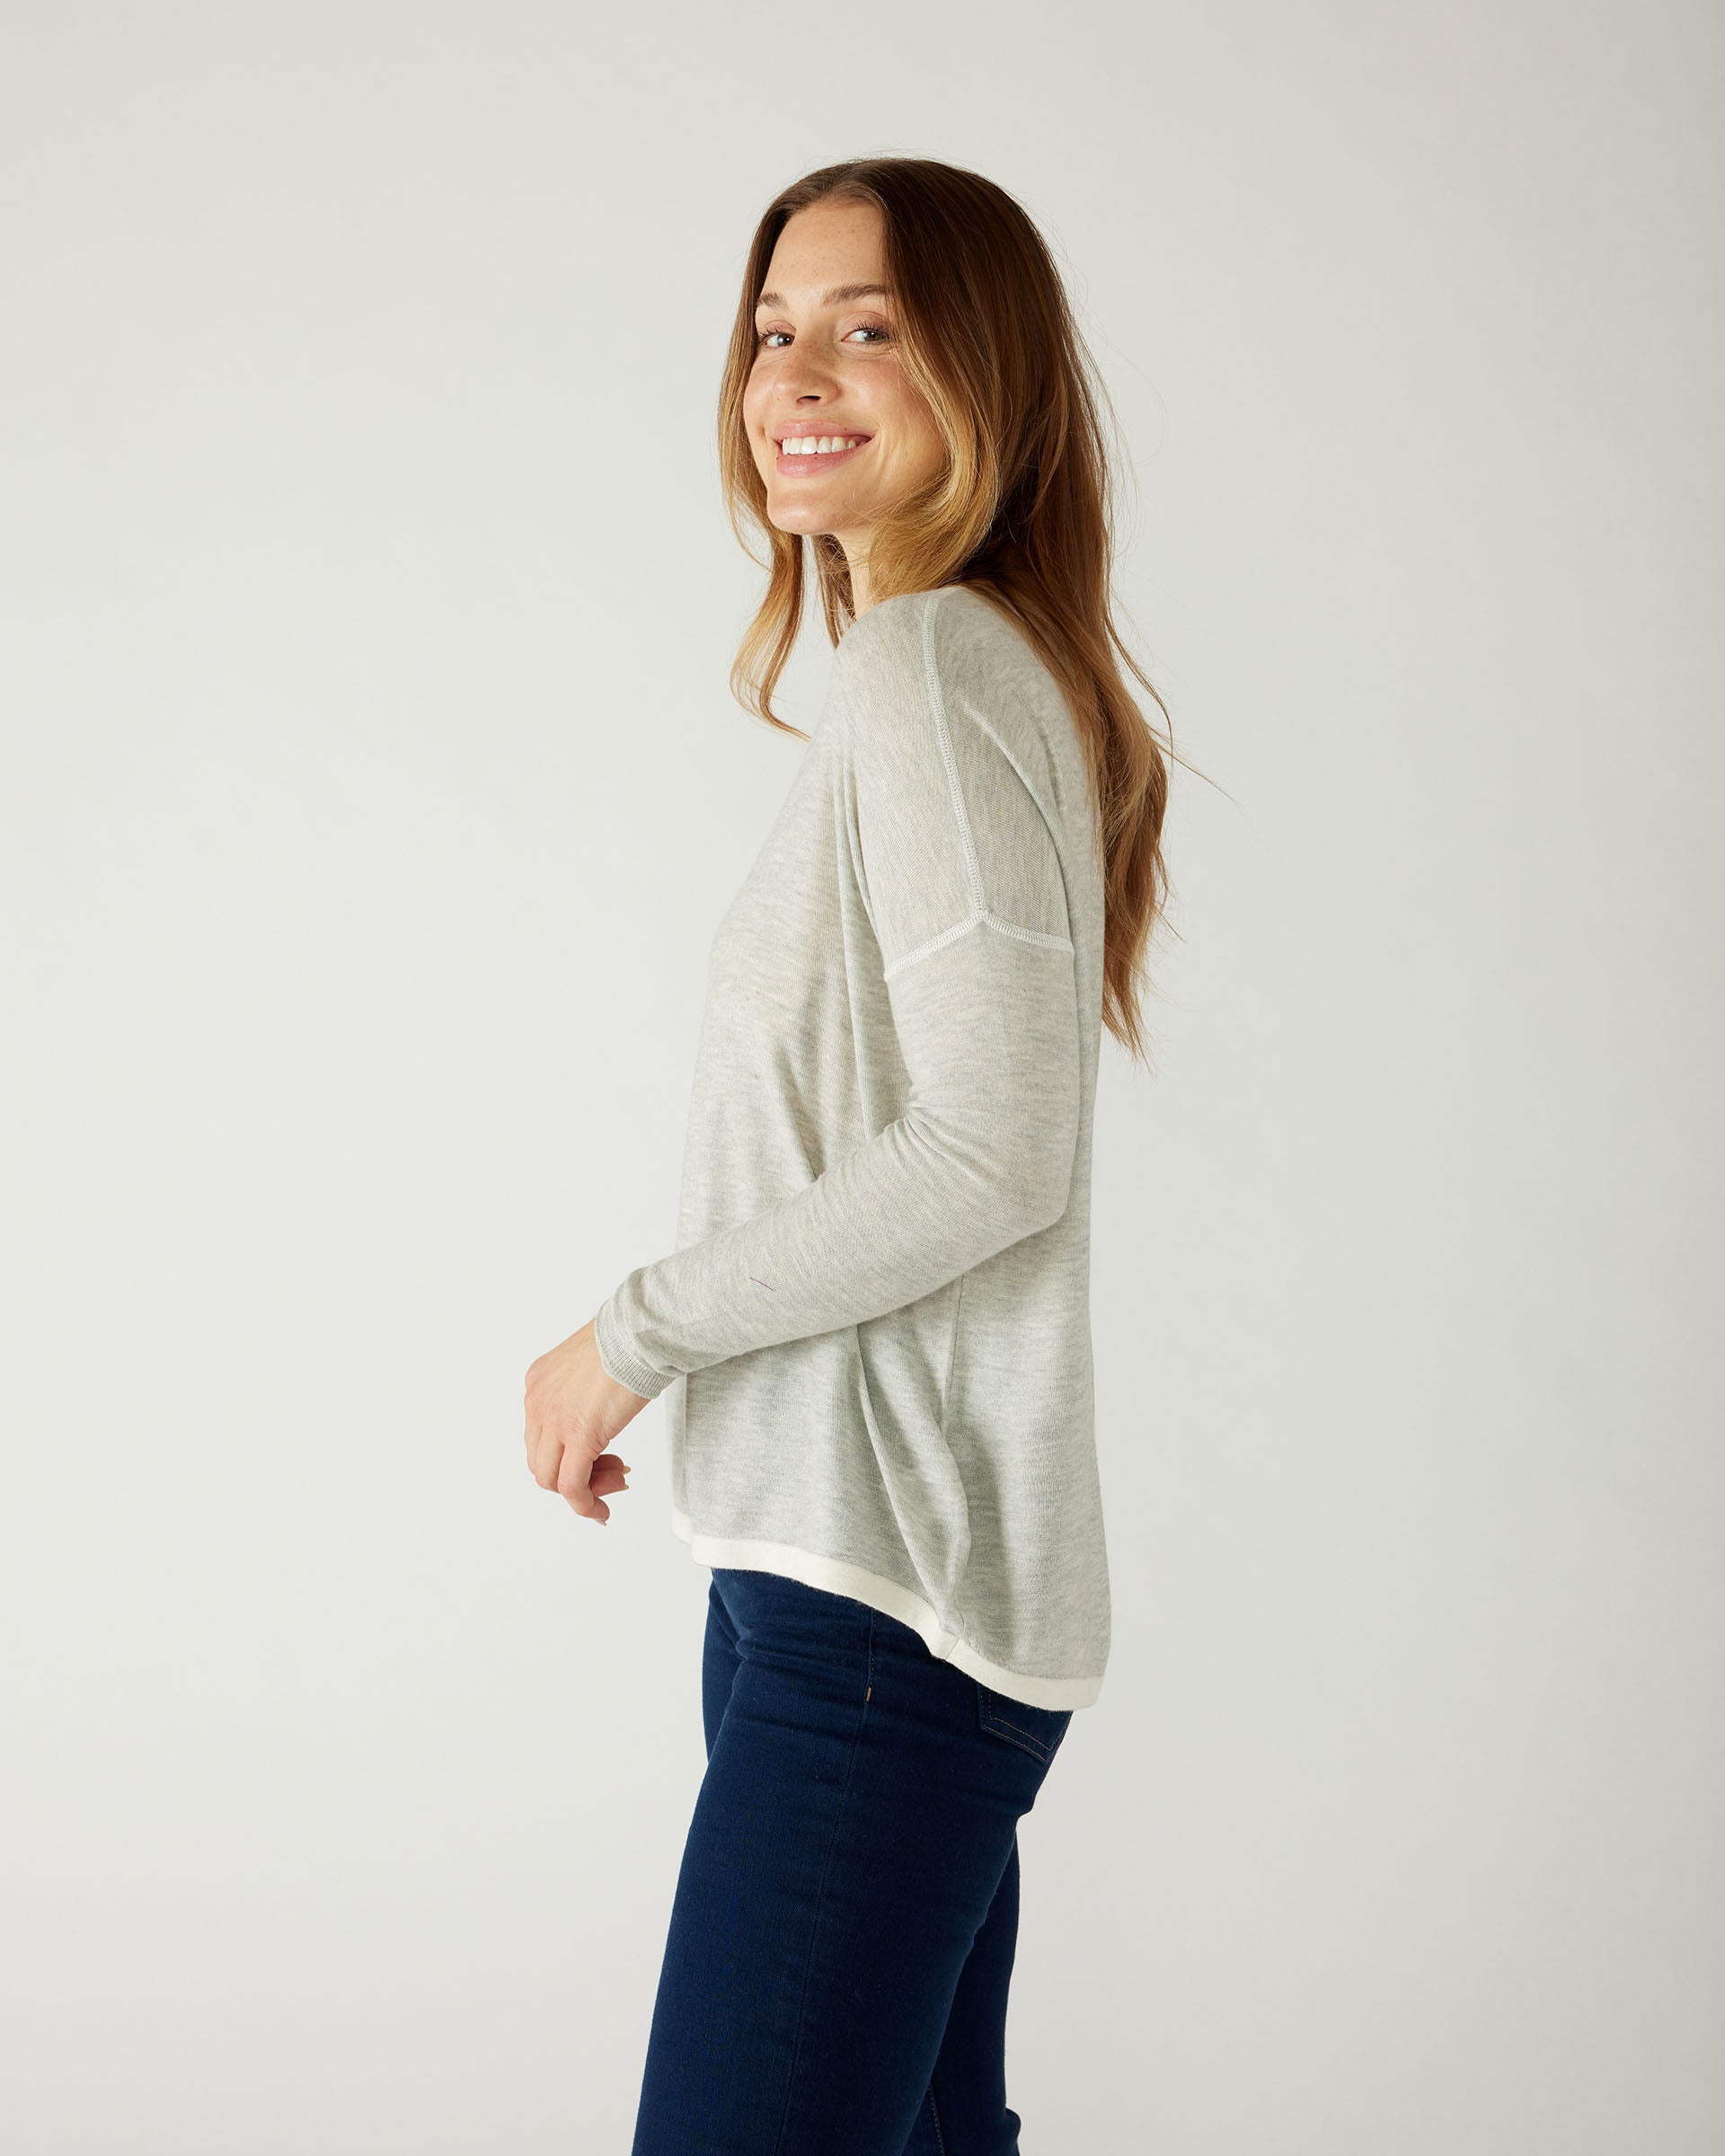 profile of woman wearing mersea saltwash sweater in grey